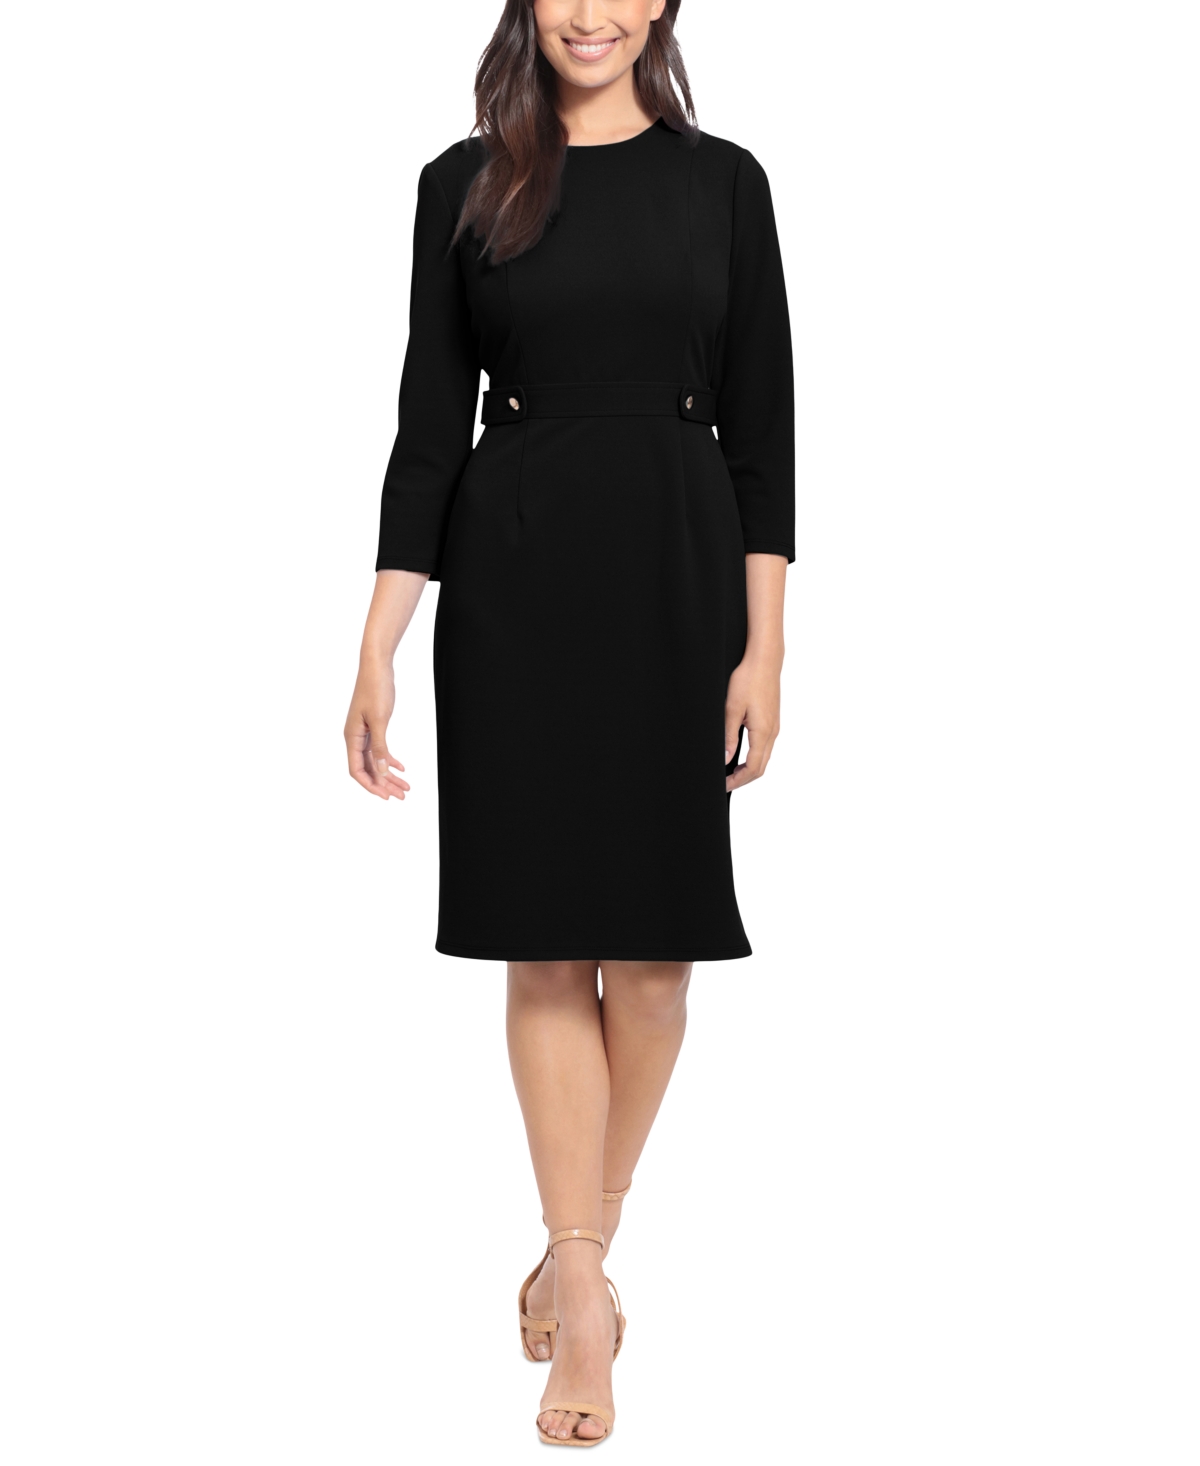 Women's Jewel-Neck 3/4-Sleeve Sheath Dress - Black